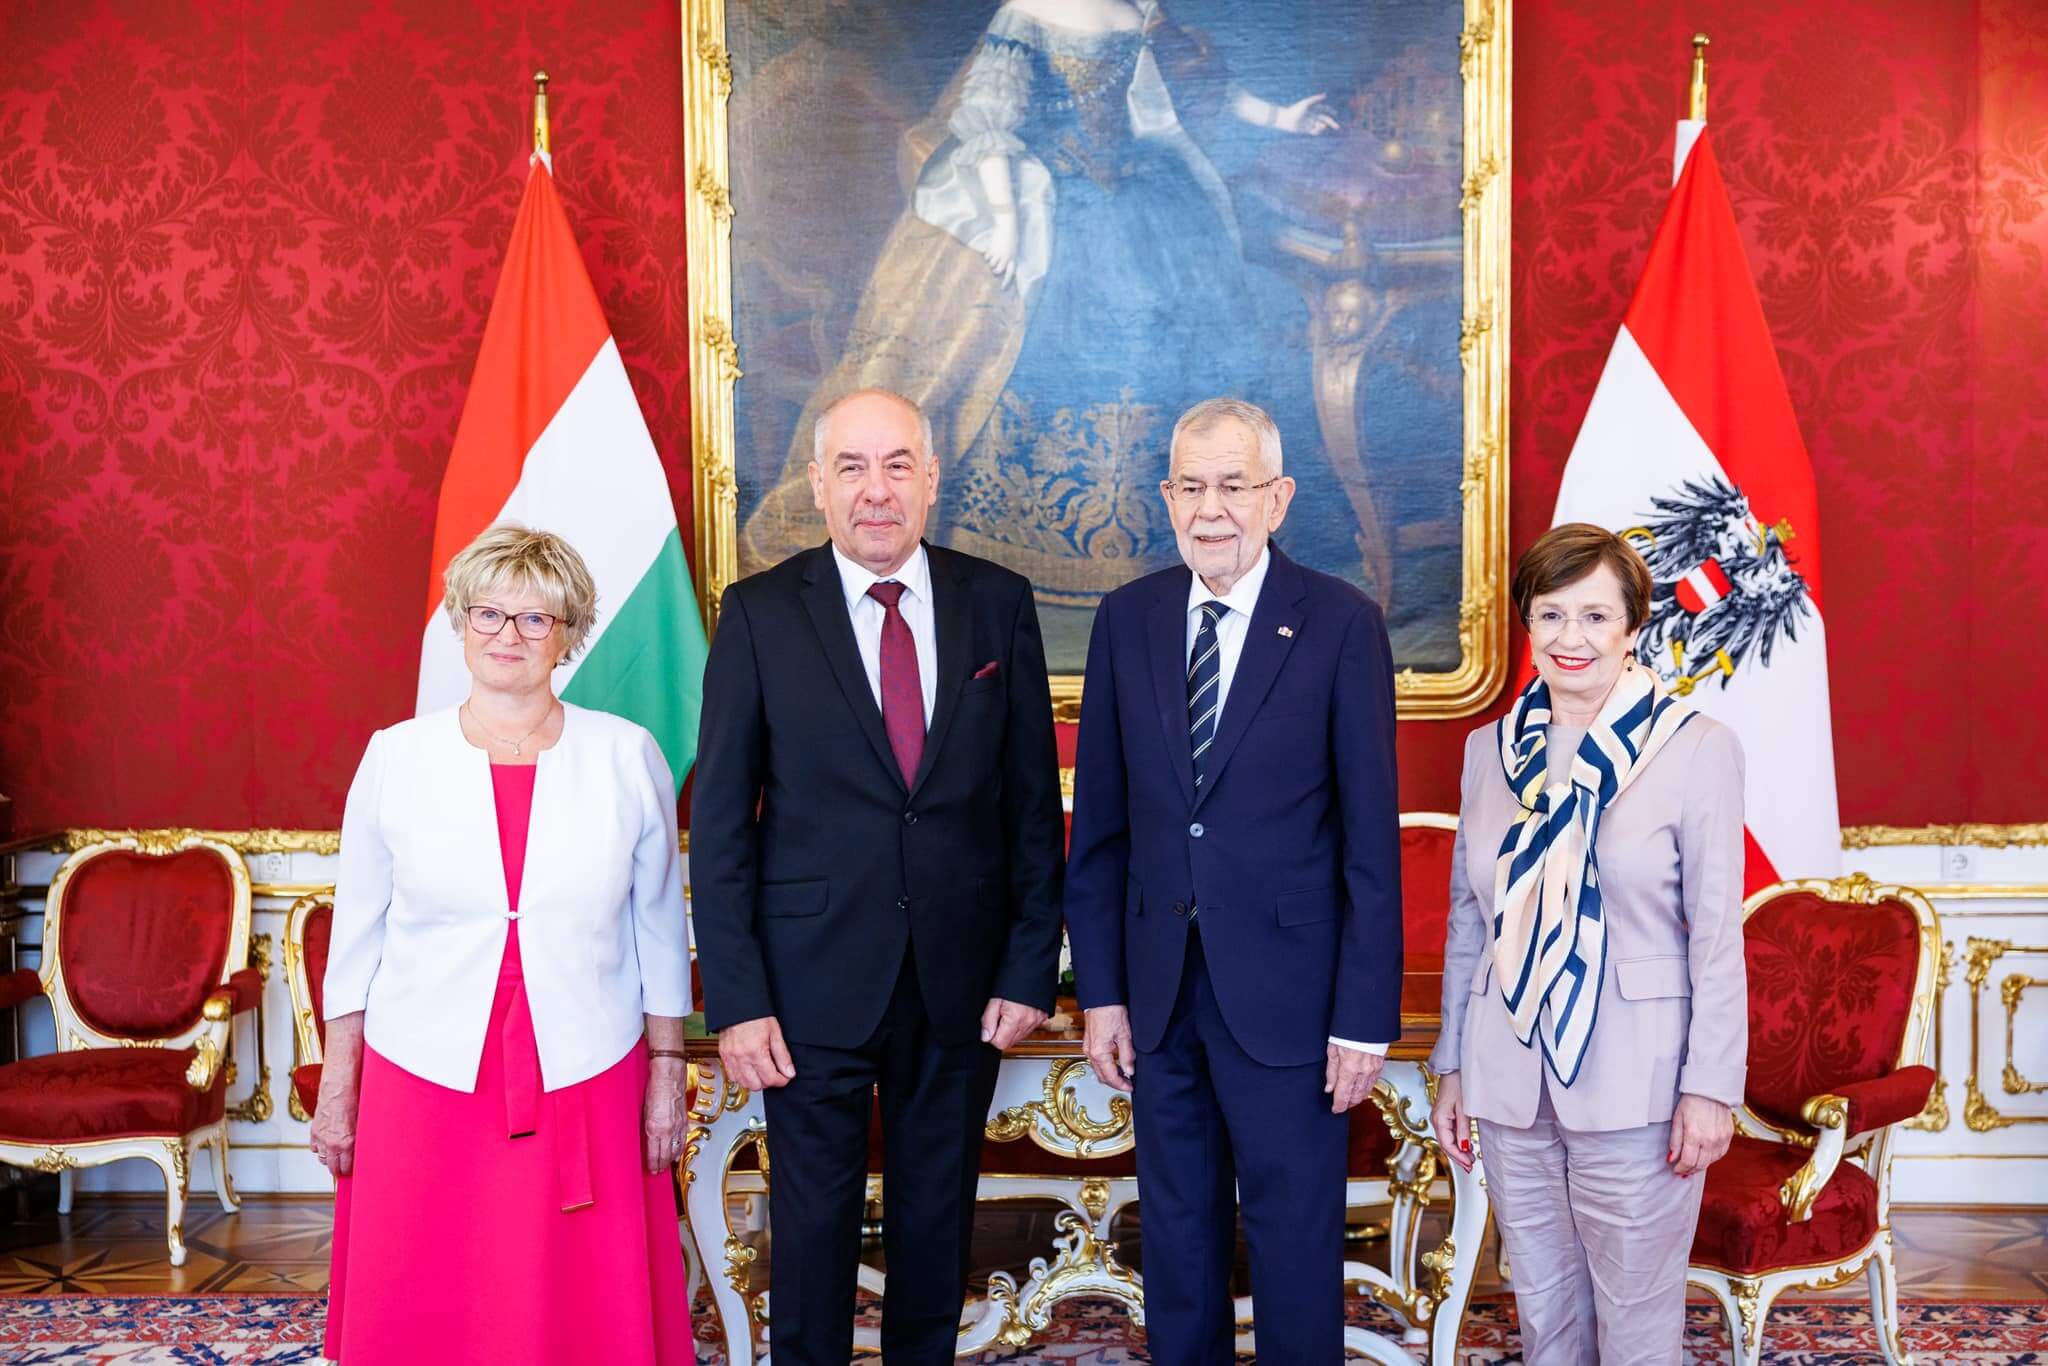 Hungary-Austria Ties 'Excellent', Explains President Sulyok